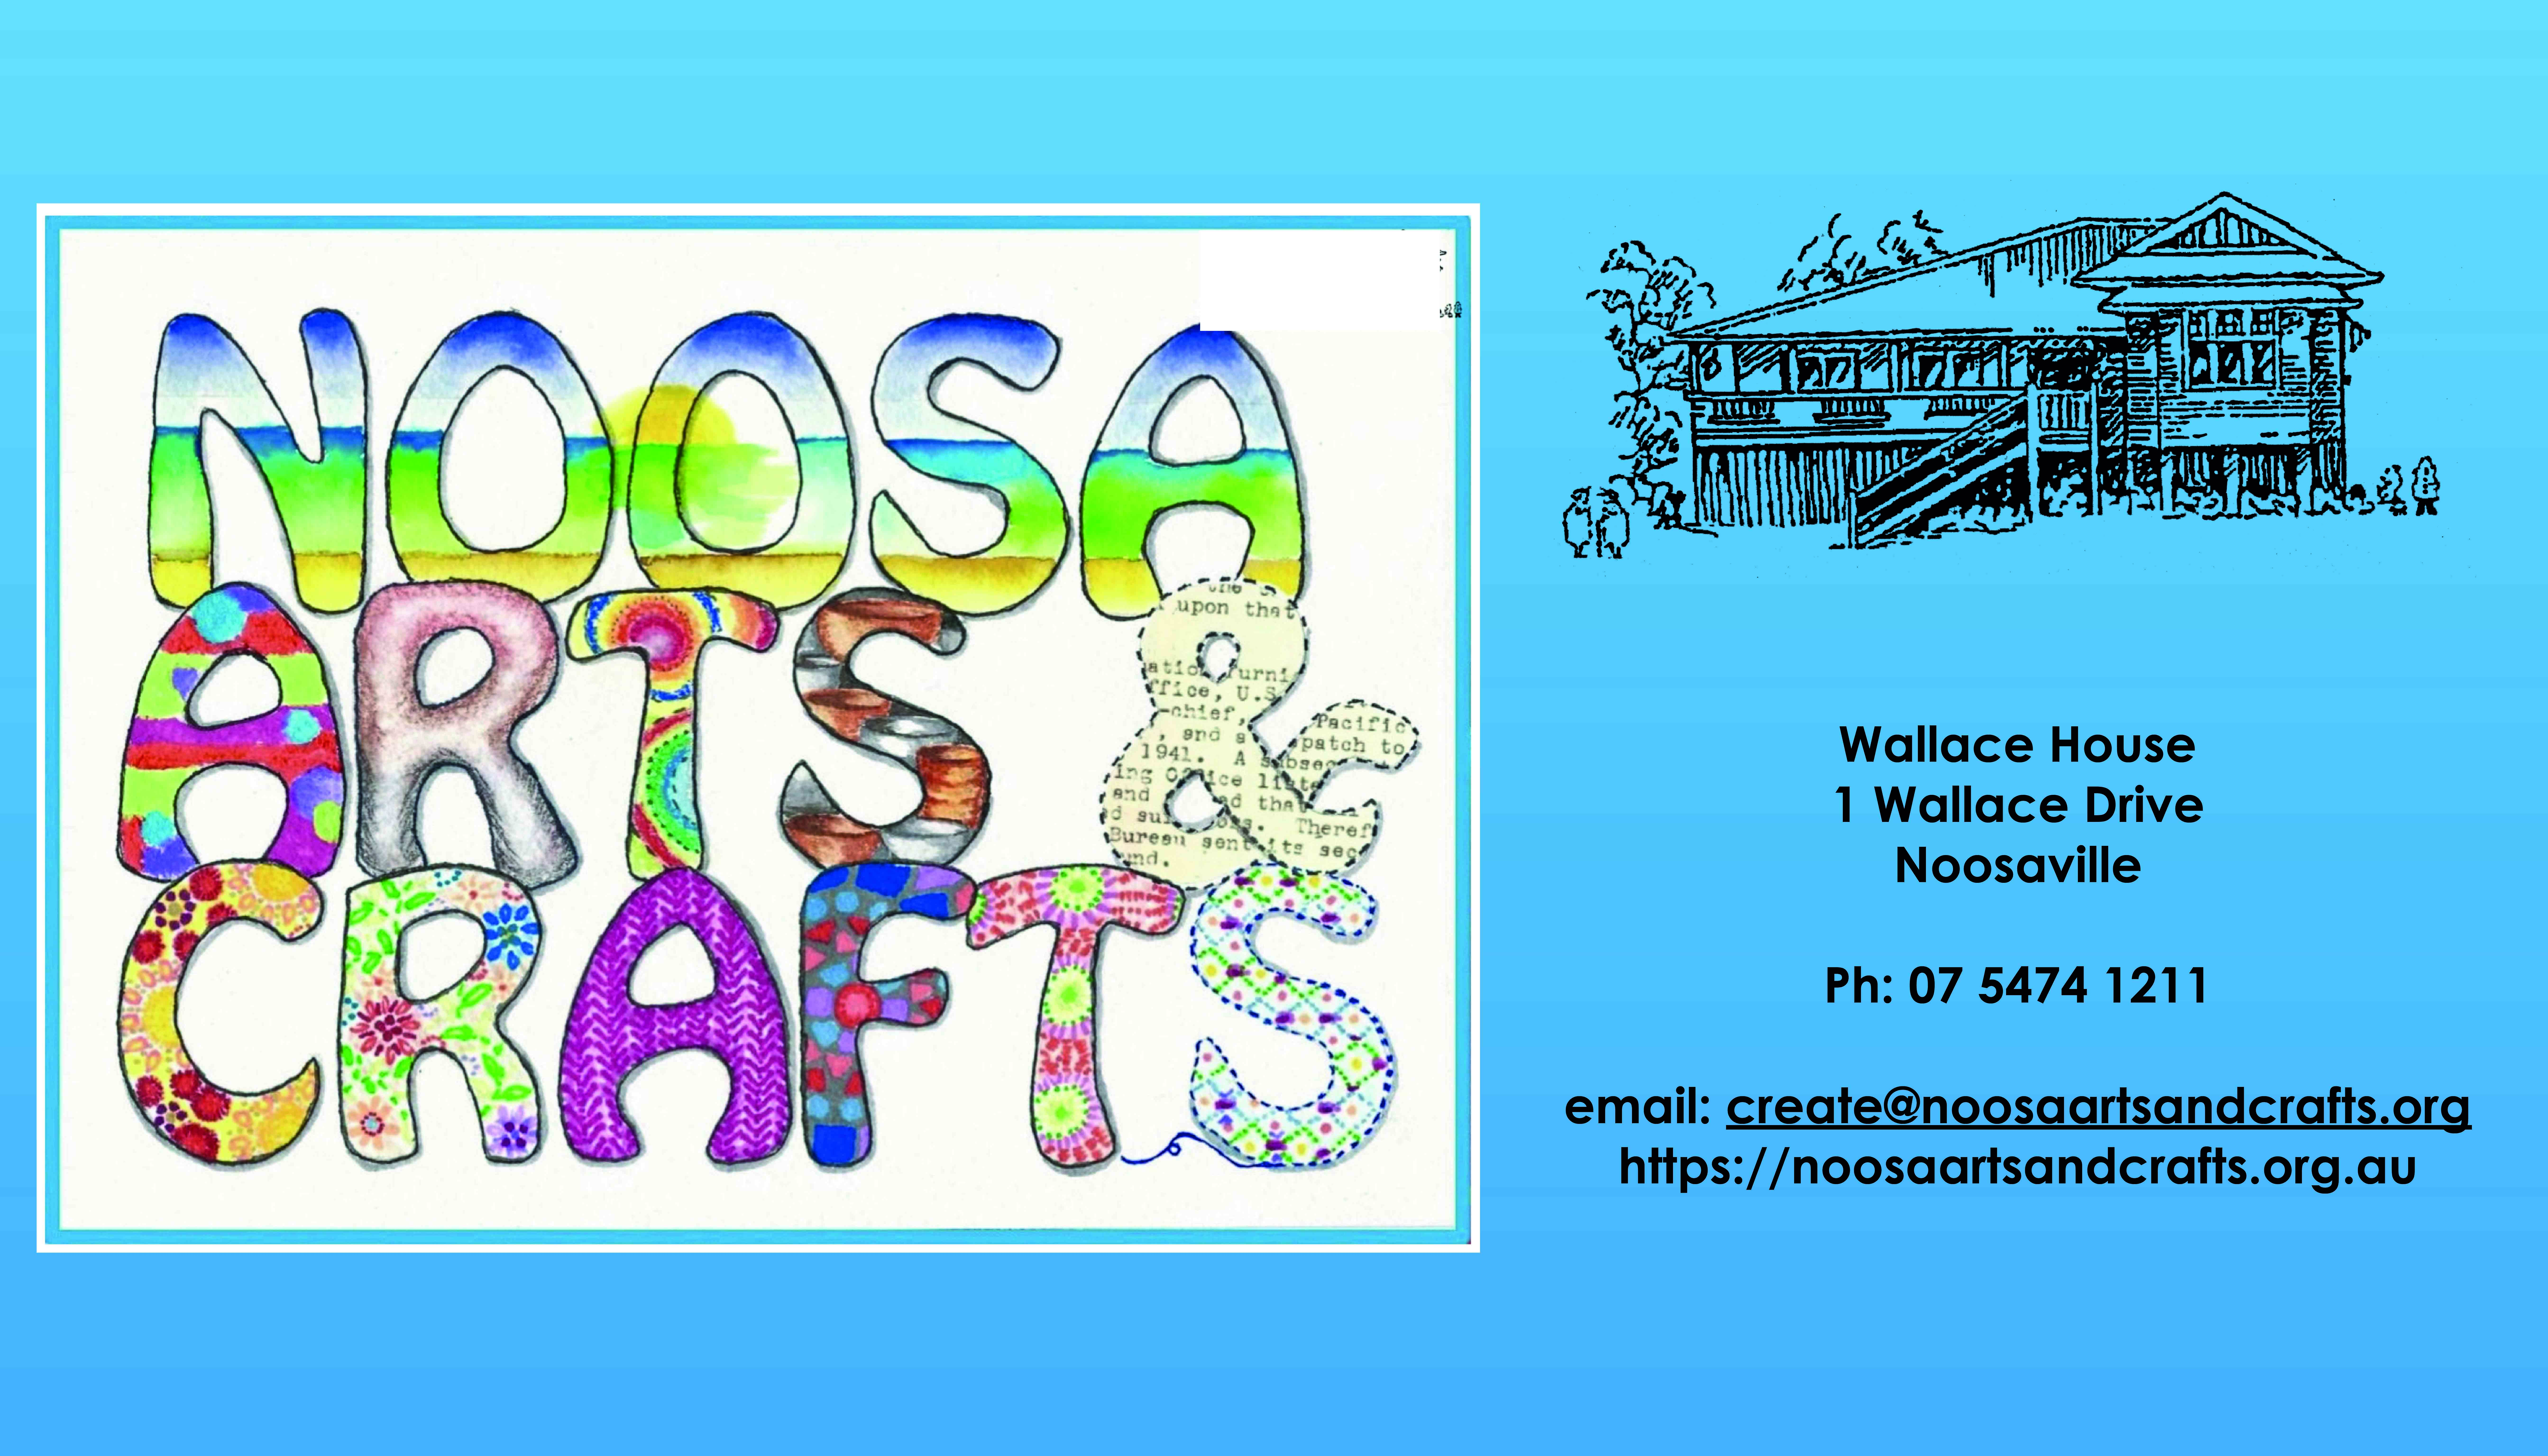 Noosa Shire Arts and Crafts Inc